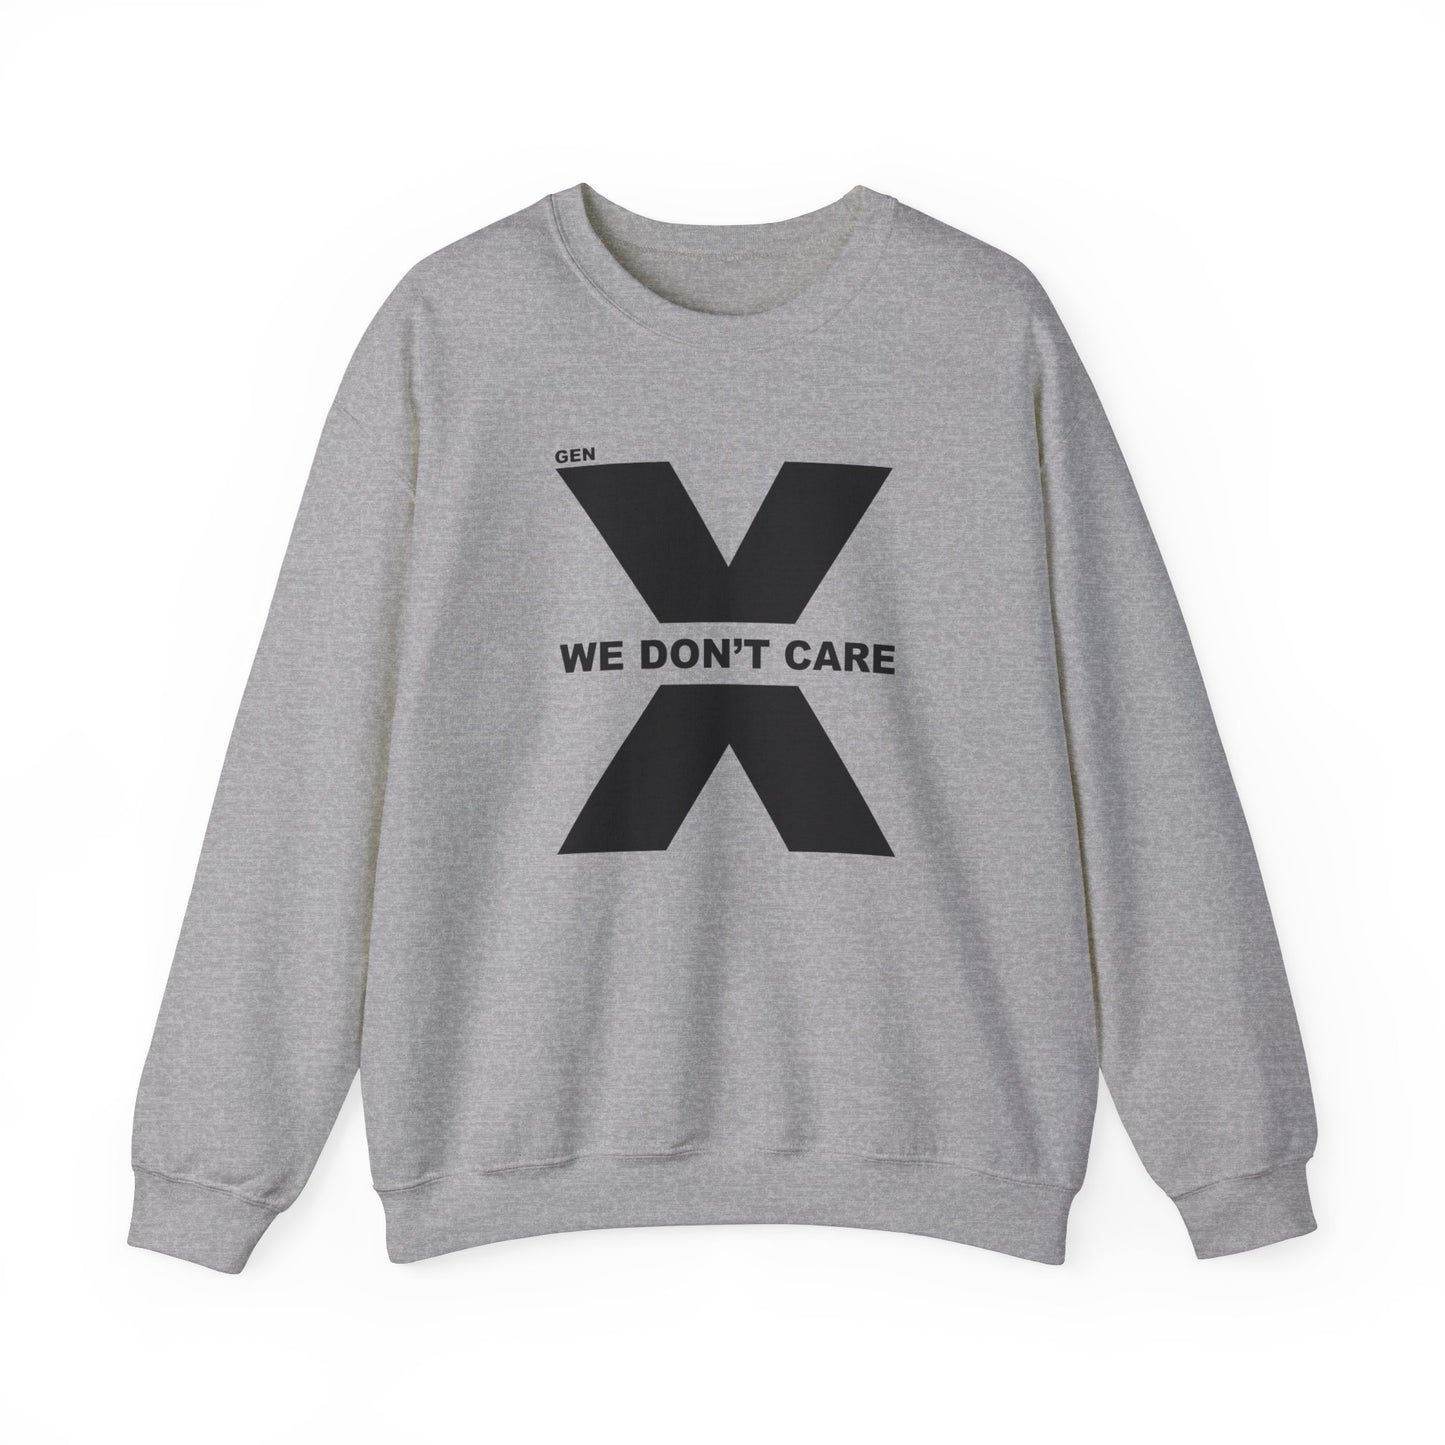 Gen X Sweatshirt Generation X Gift We Don't Care